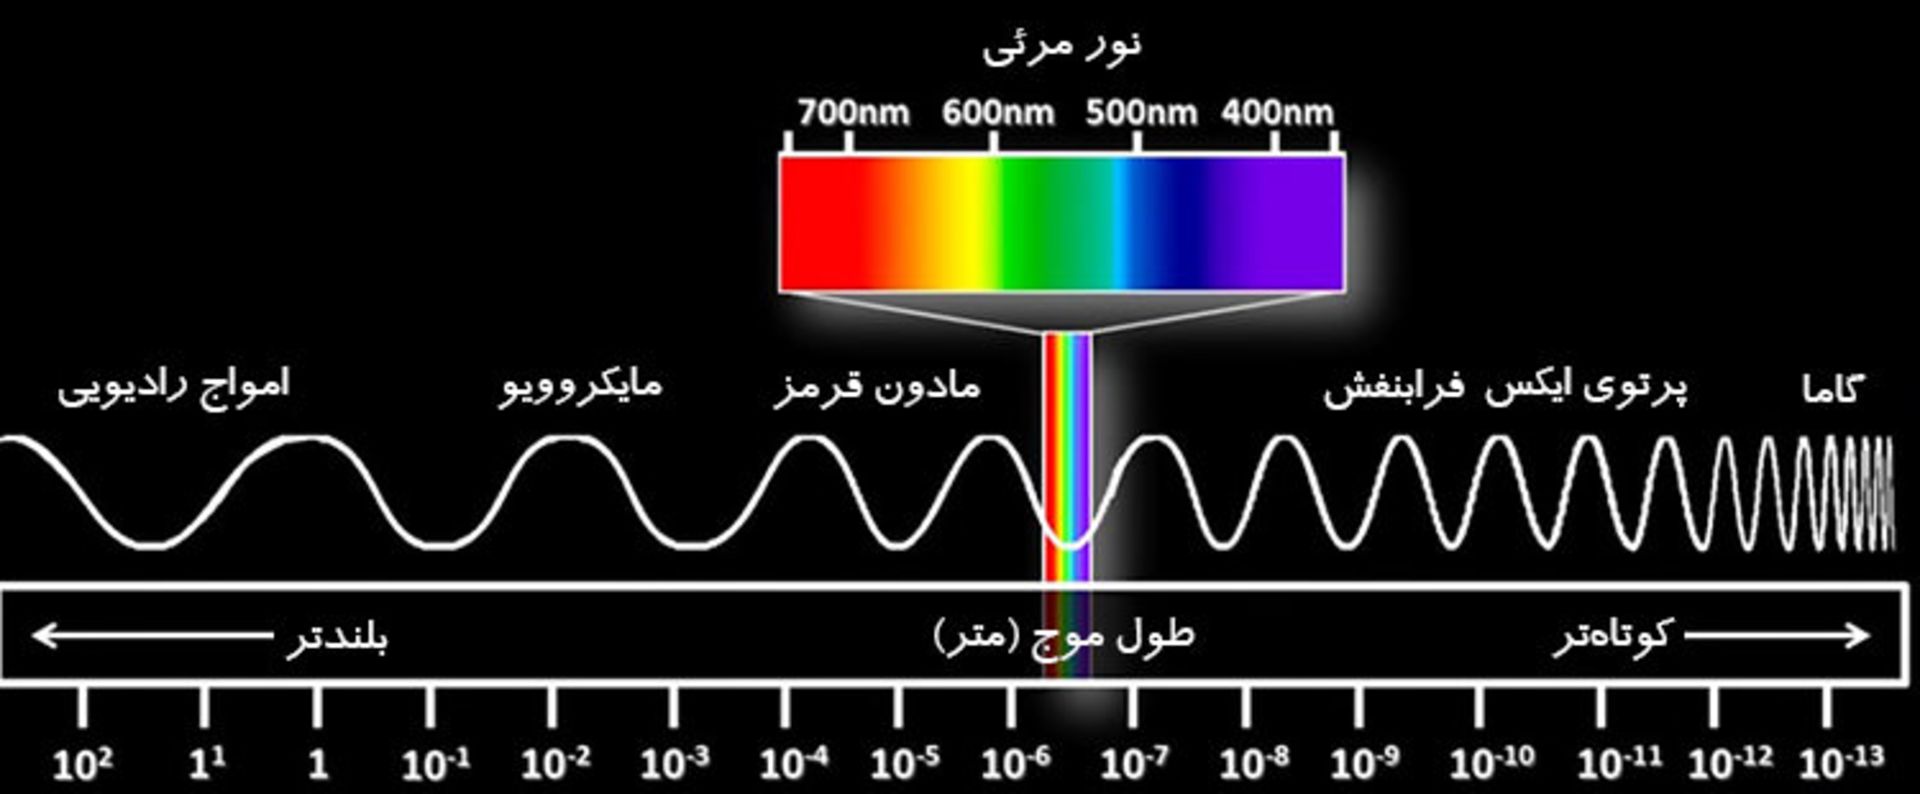 مرجع متخصصين ايران طيف الكترومغناطيسي / Electromagnetic Spectrum